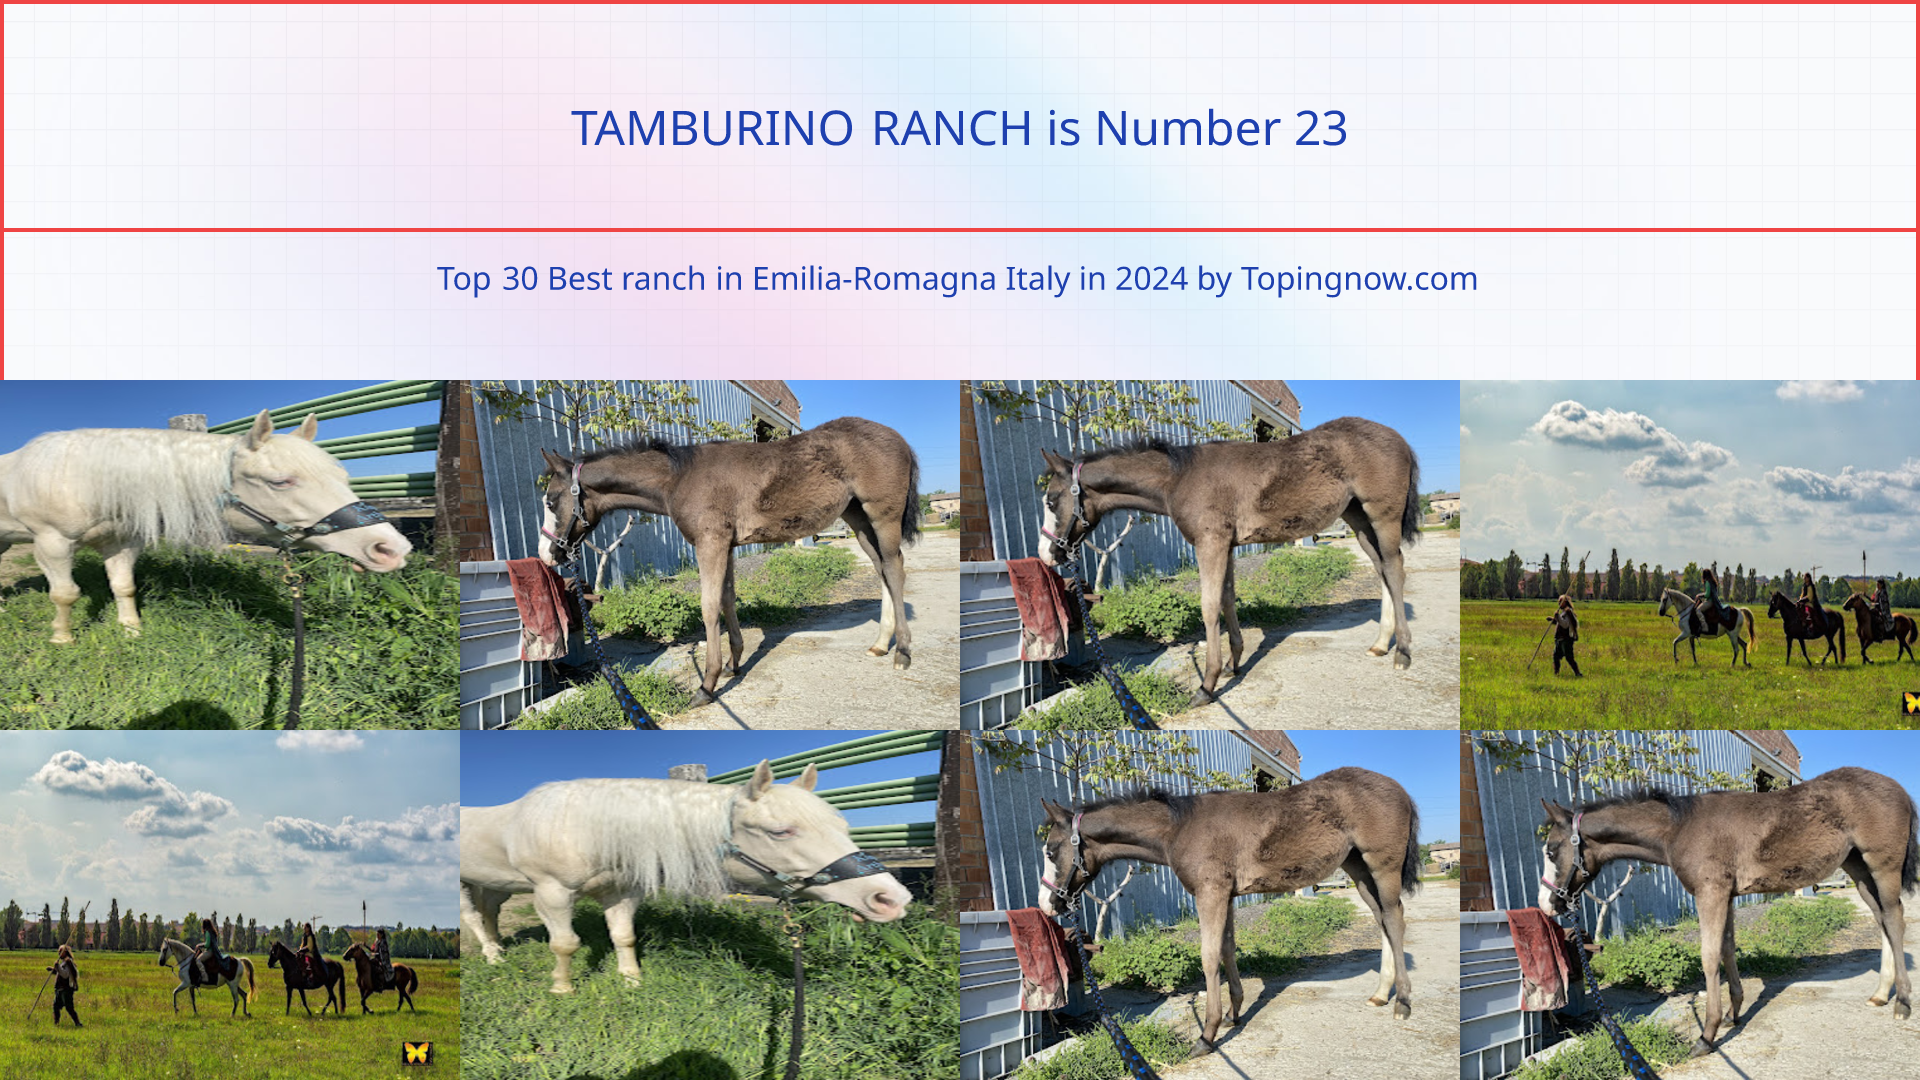 TAMBURINO RANCH: Top 30 Best ranch in Emilia-Romagna Italy in 2024